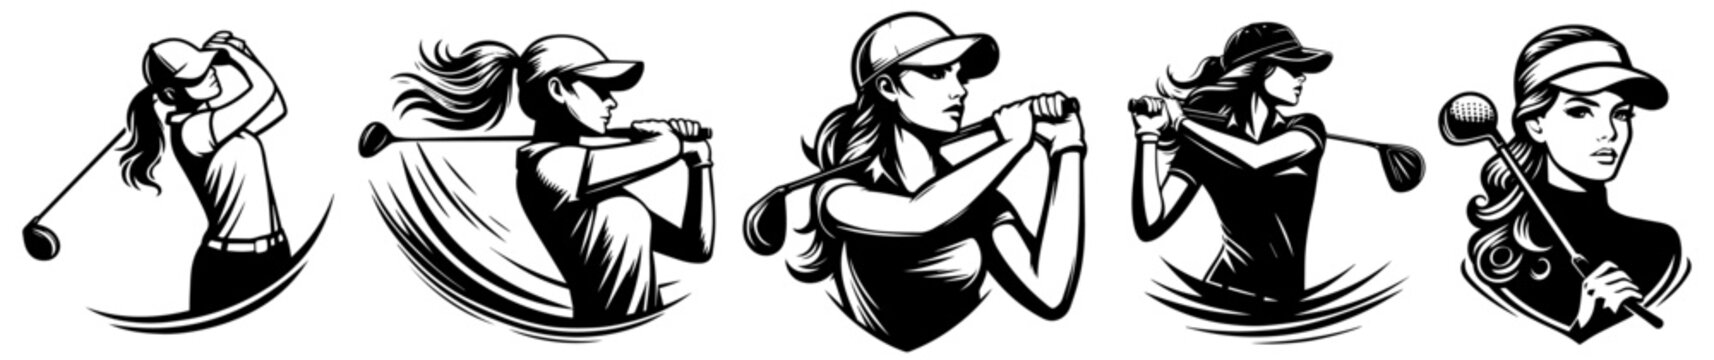 female golfers in action elegant golfing ladies black vector